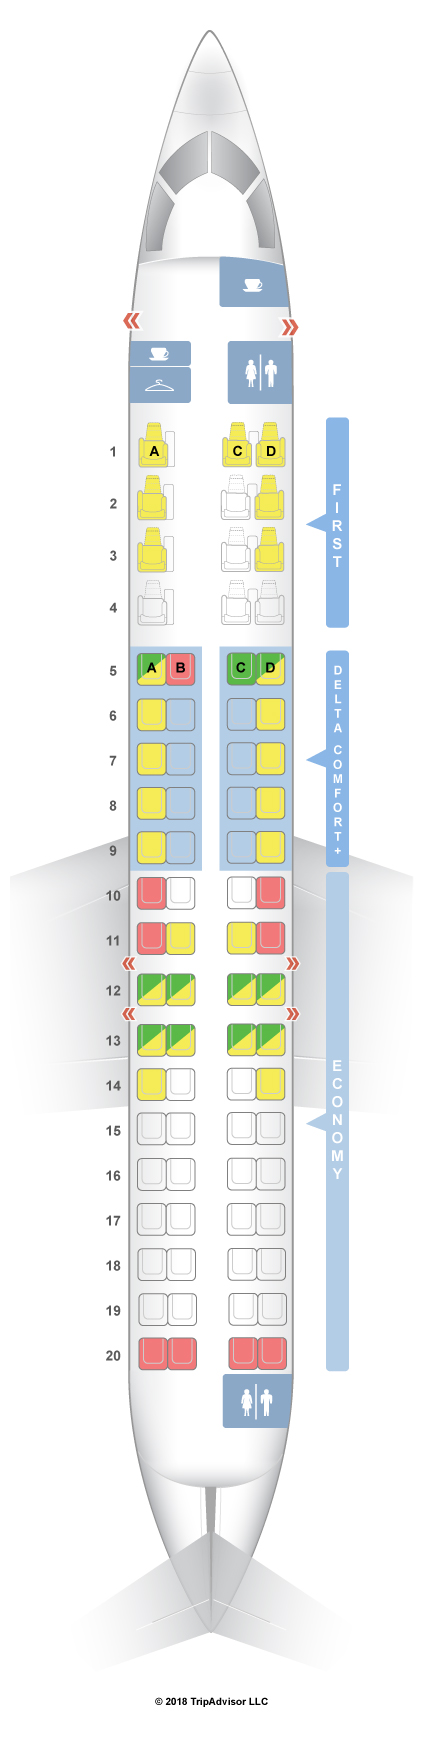 Regional Jet 900 Seating Chart